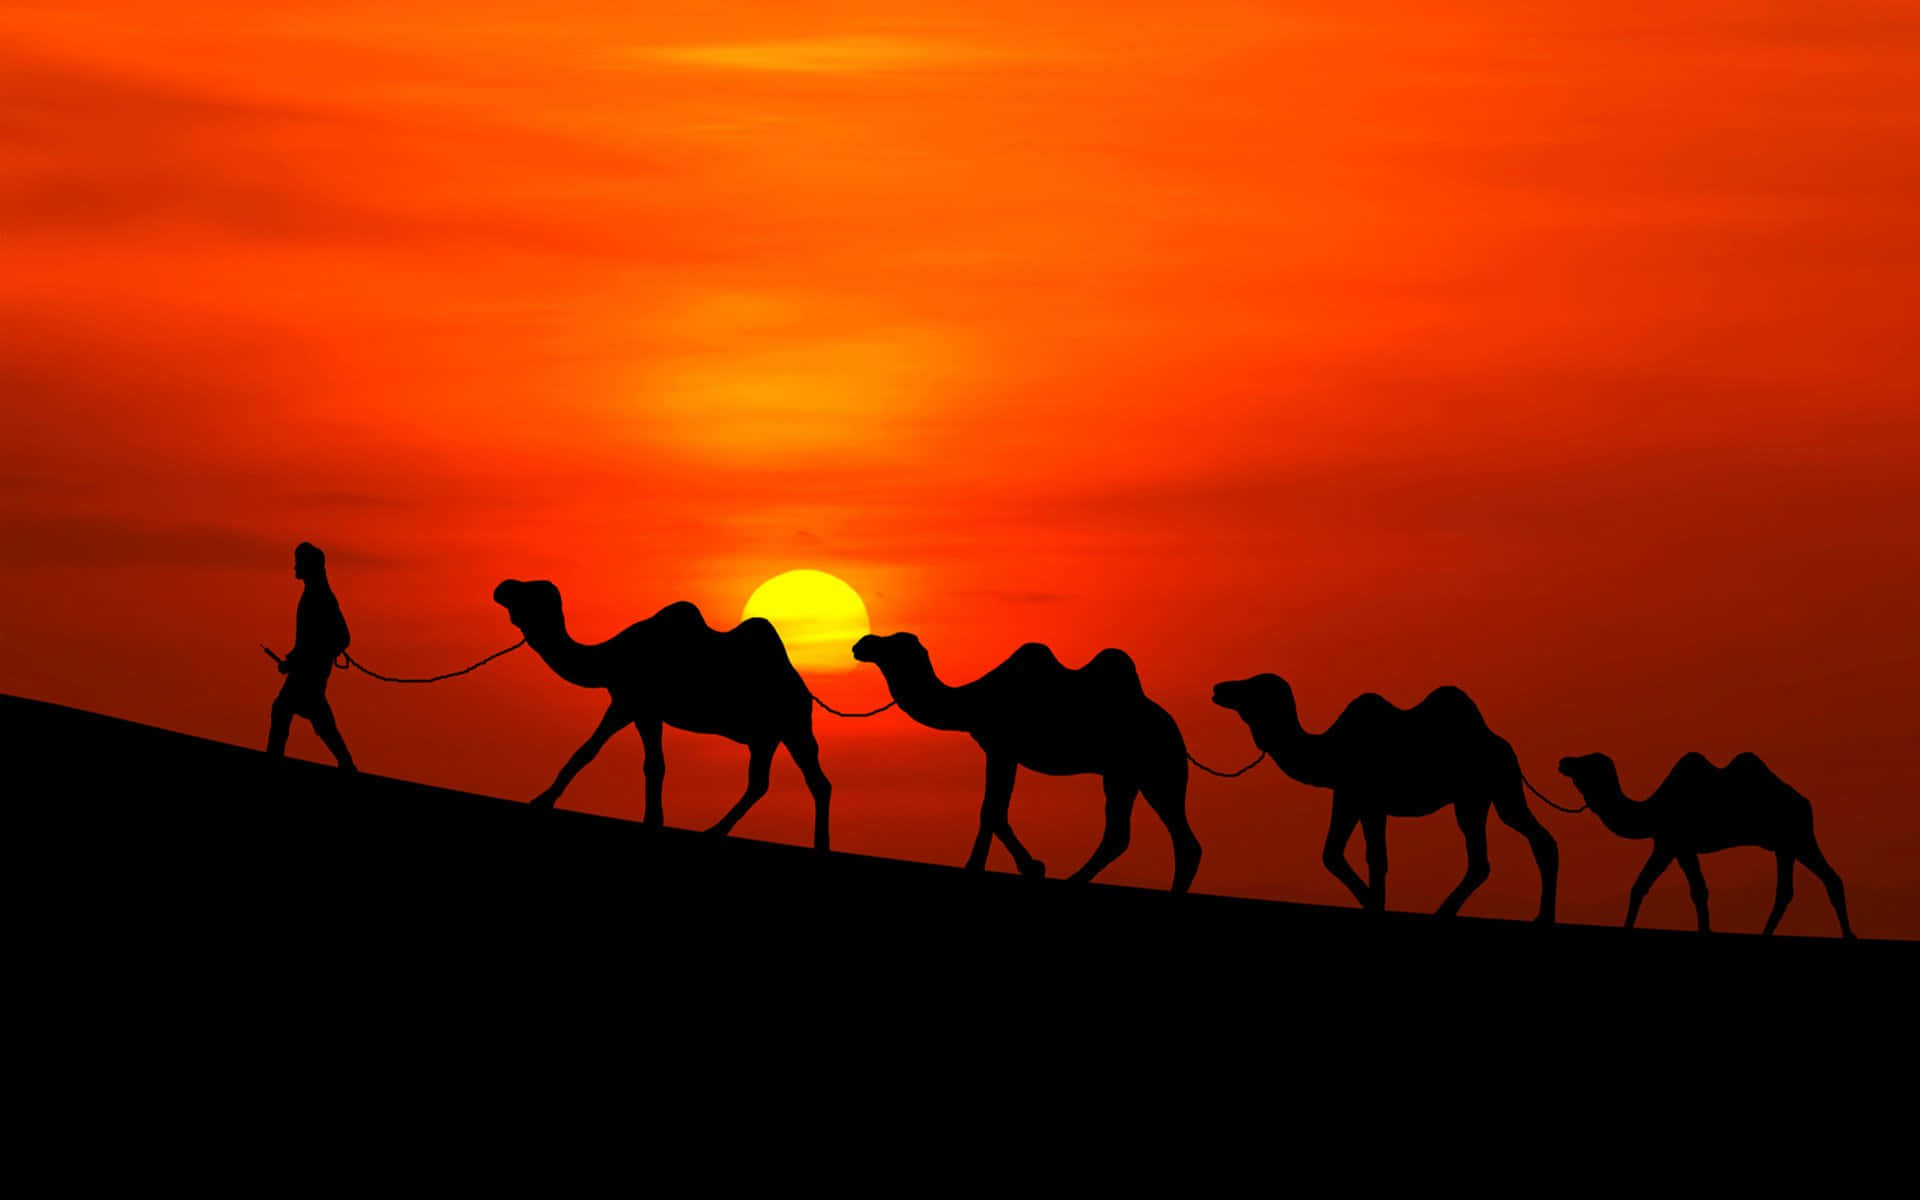 Image  A Camel Wandering Through an Arid Landscape